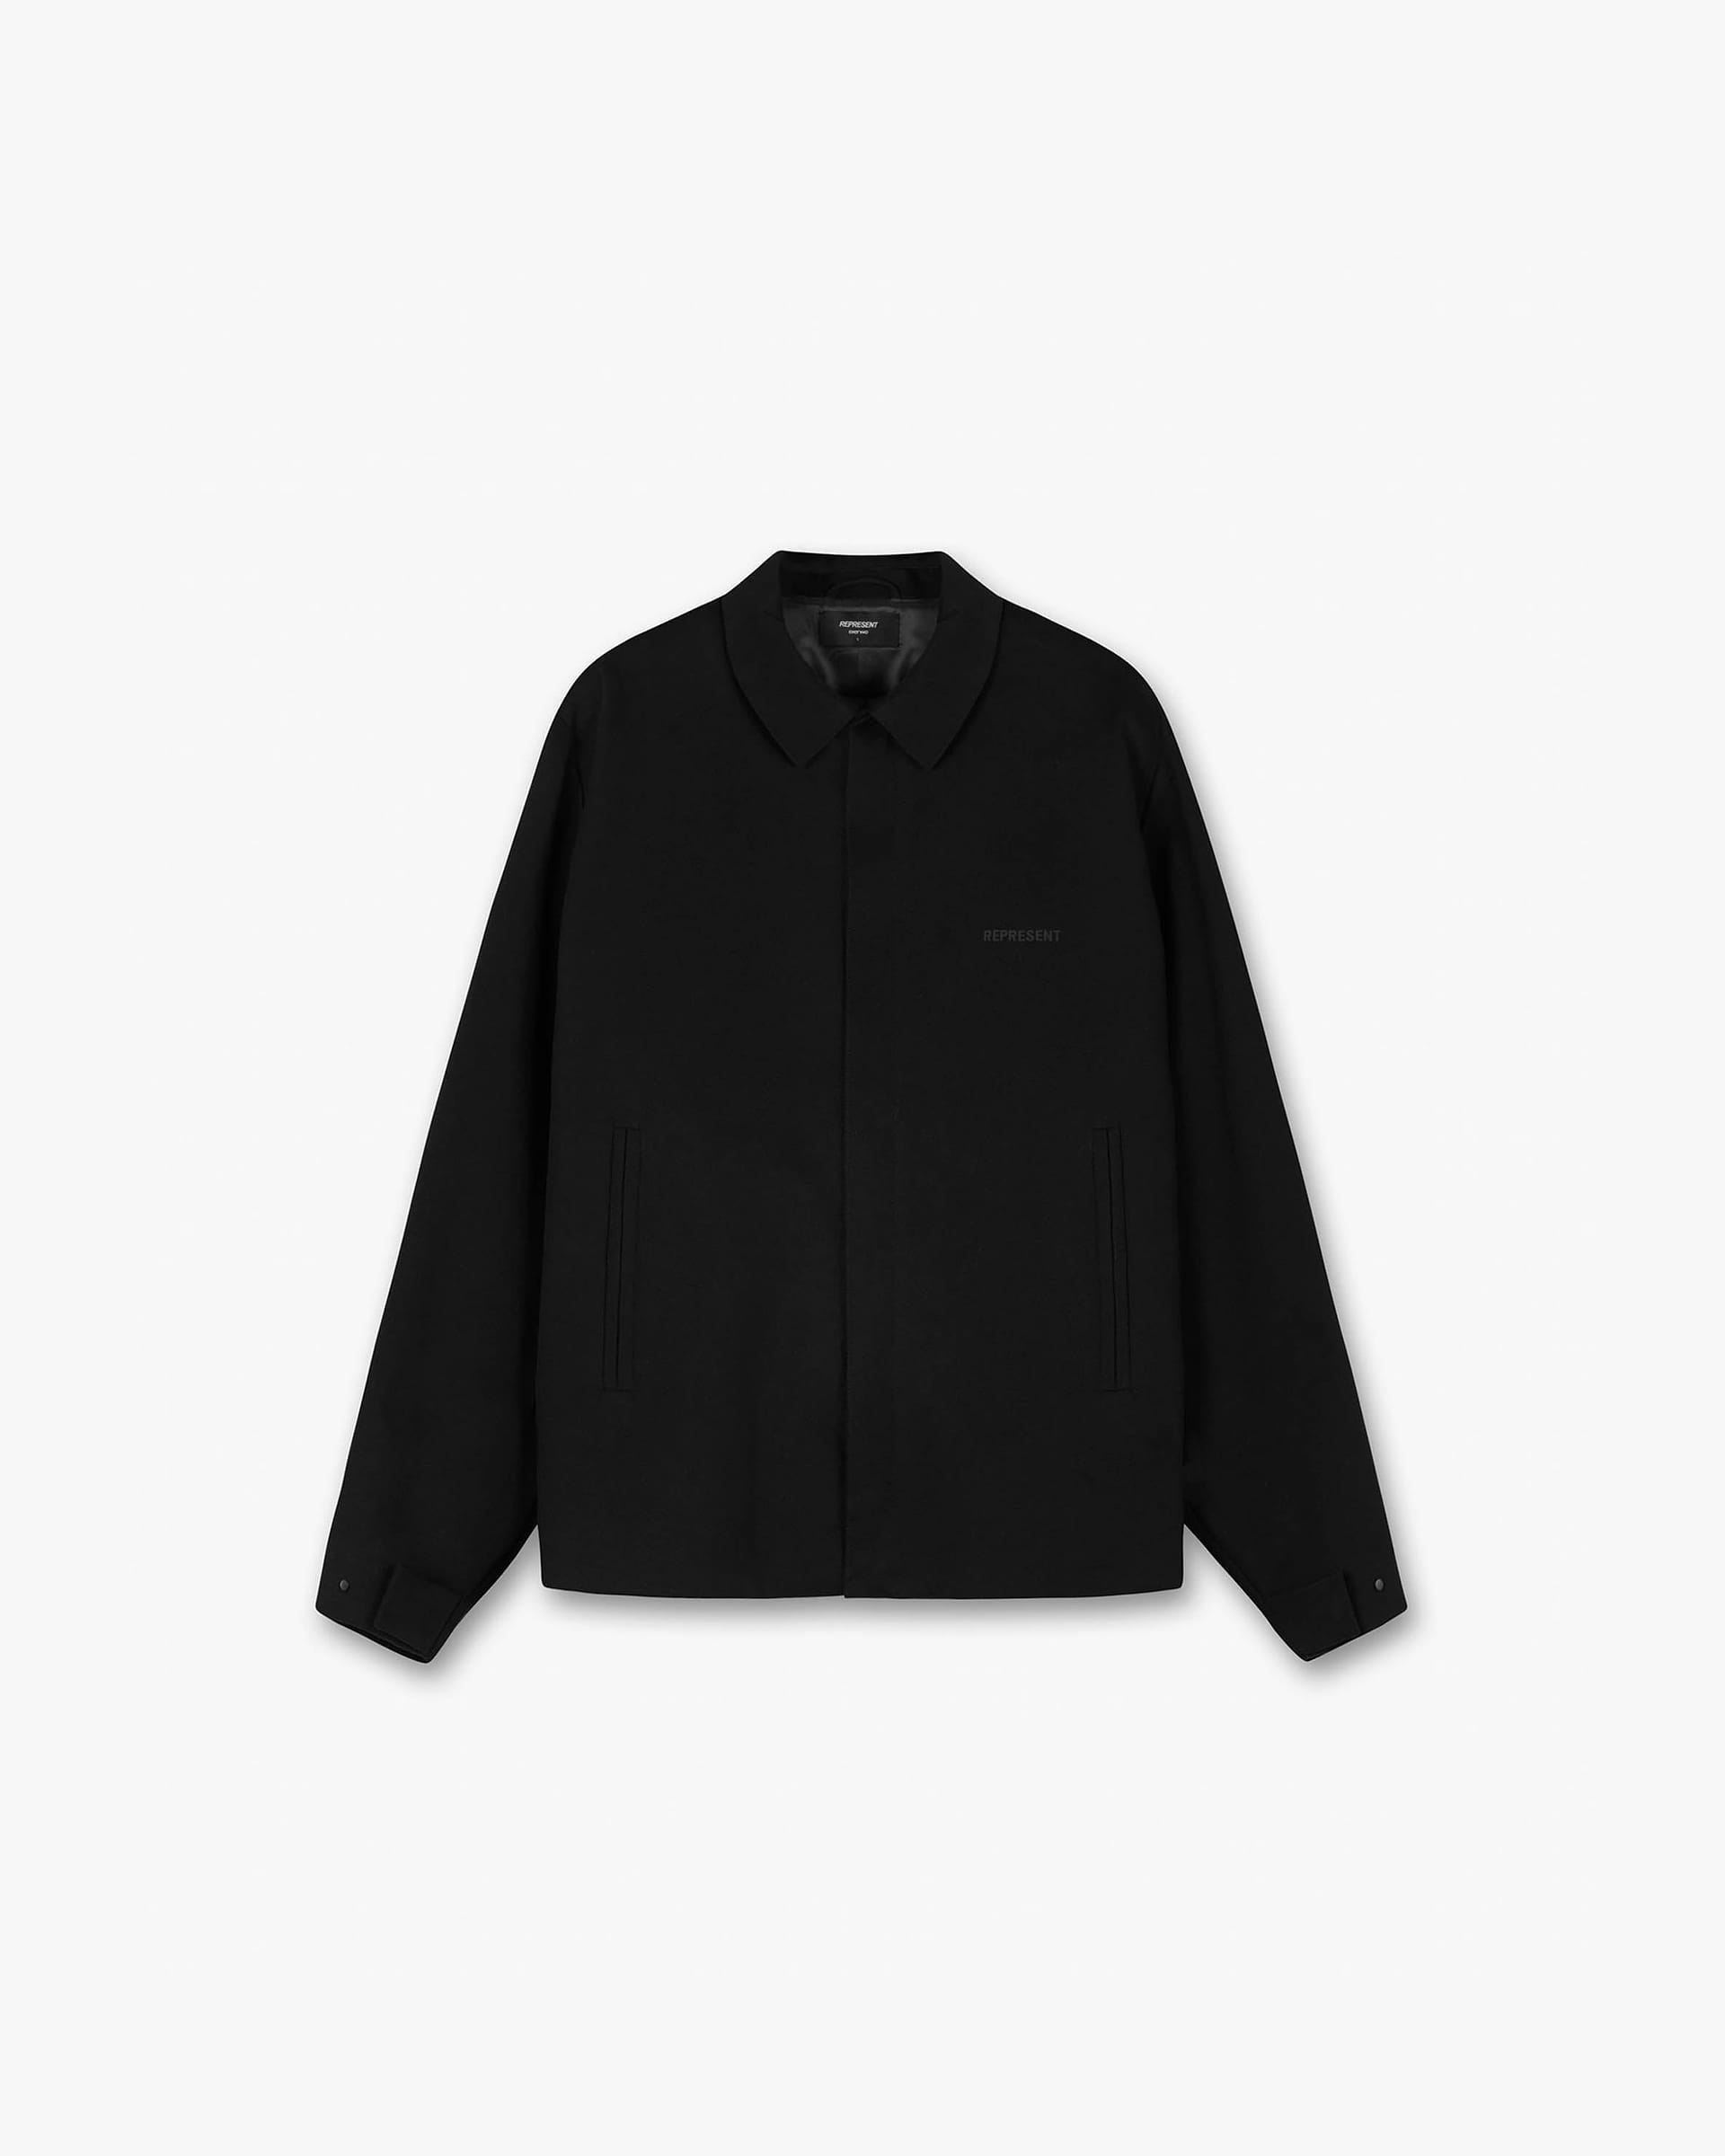 Coach Jacket | Black Outerwear FW21 | Represent Clo